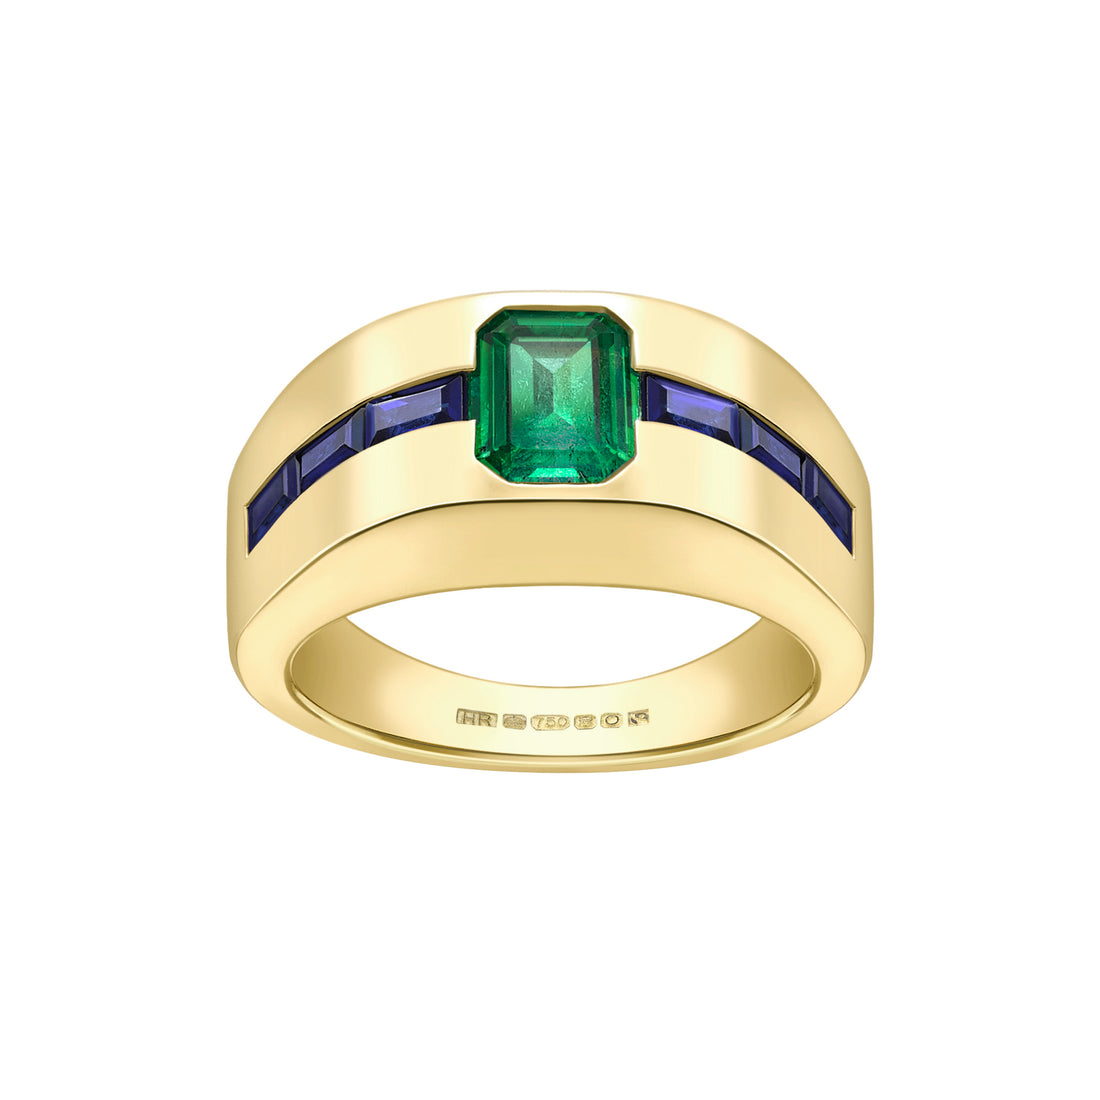  Channel Set Sapphire & Emerald Ring by Hattie Rickards | The Cut London